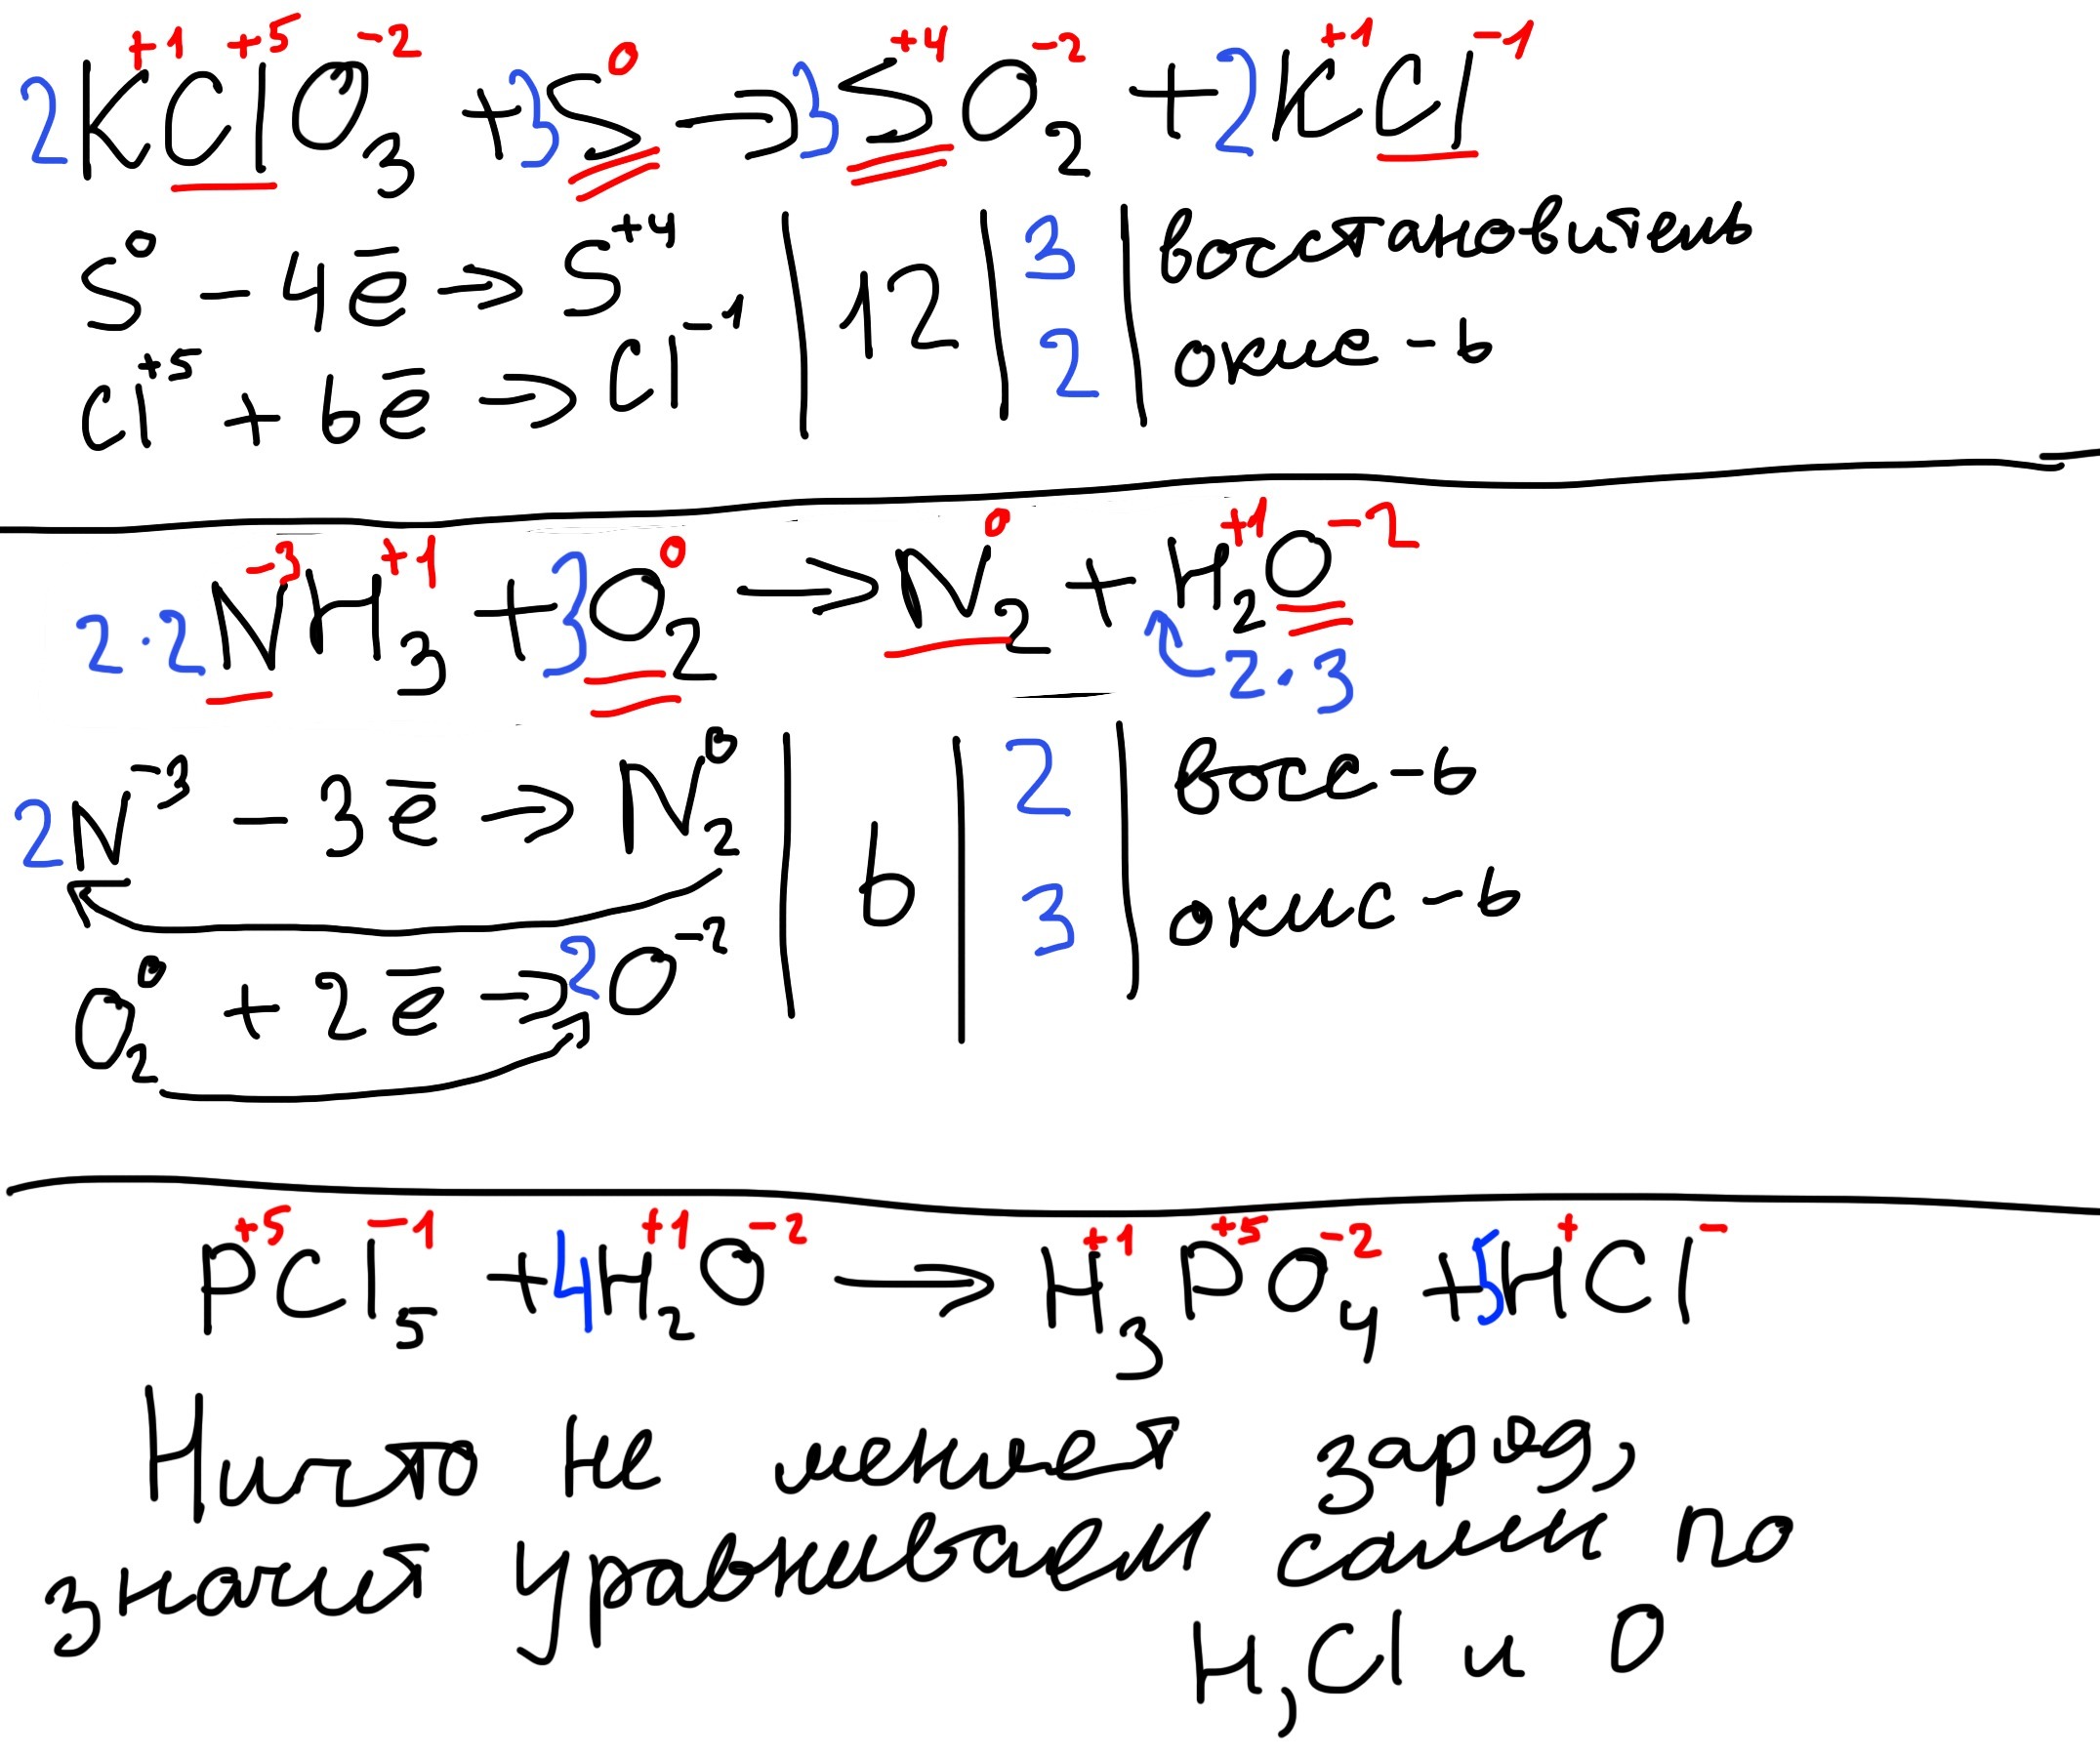 Feso4 kclo3 koh. Kclo3+s->KCL+so2 электронный баланс. Kclo3+s->KCL+so2 окислительно восстановительная реакция. Метод электронного баланса kclo3+s.